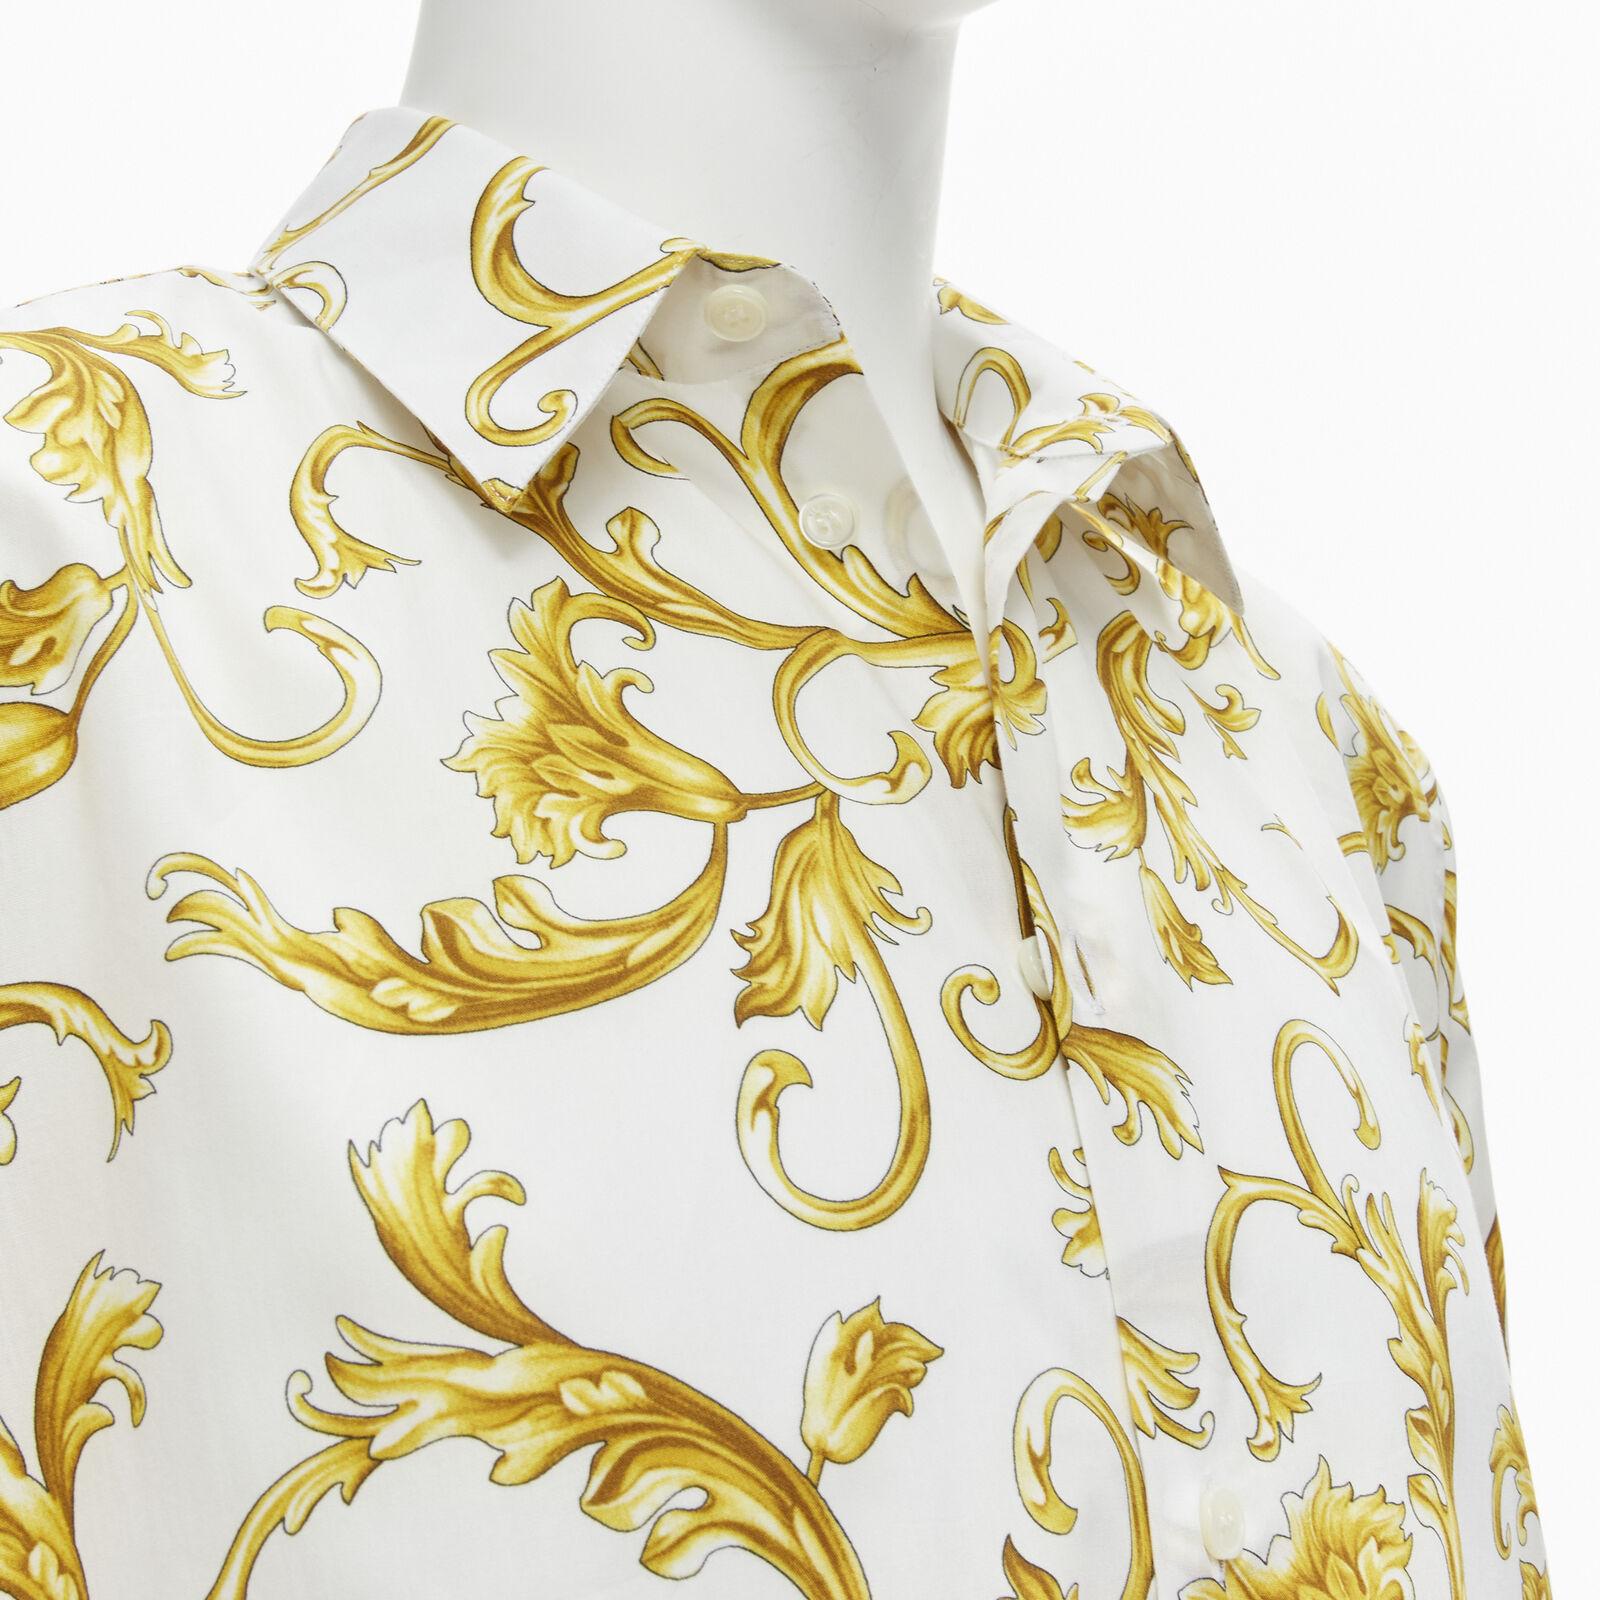 new VERSACE Barocco Rococo white gold floral leaf cotton shirt EU48 M / L
Reference: TGAS/C01472
Brand: Versace
Designer: Donatella Versace
Model: A77215S
Collection: Versace Barocco
Material: Cotton
Color: White, Gold
Pattern: Barocco
Closure: